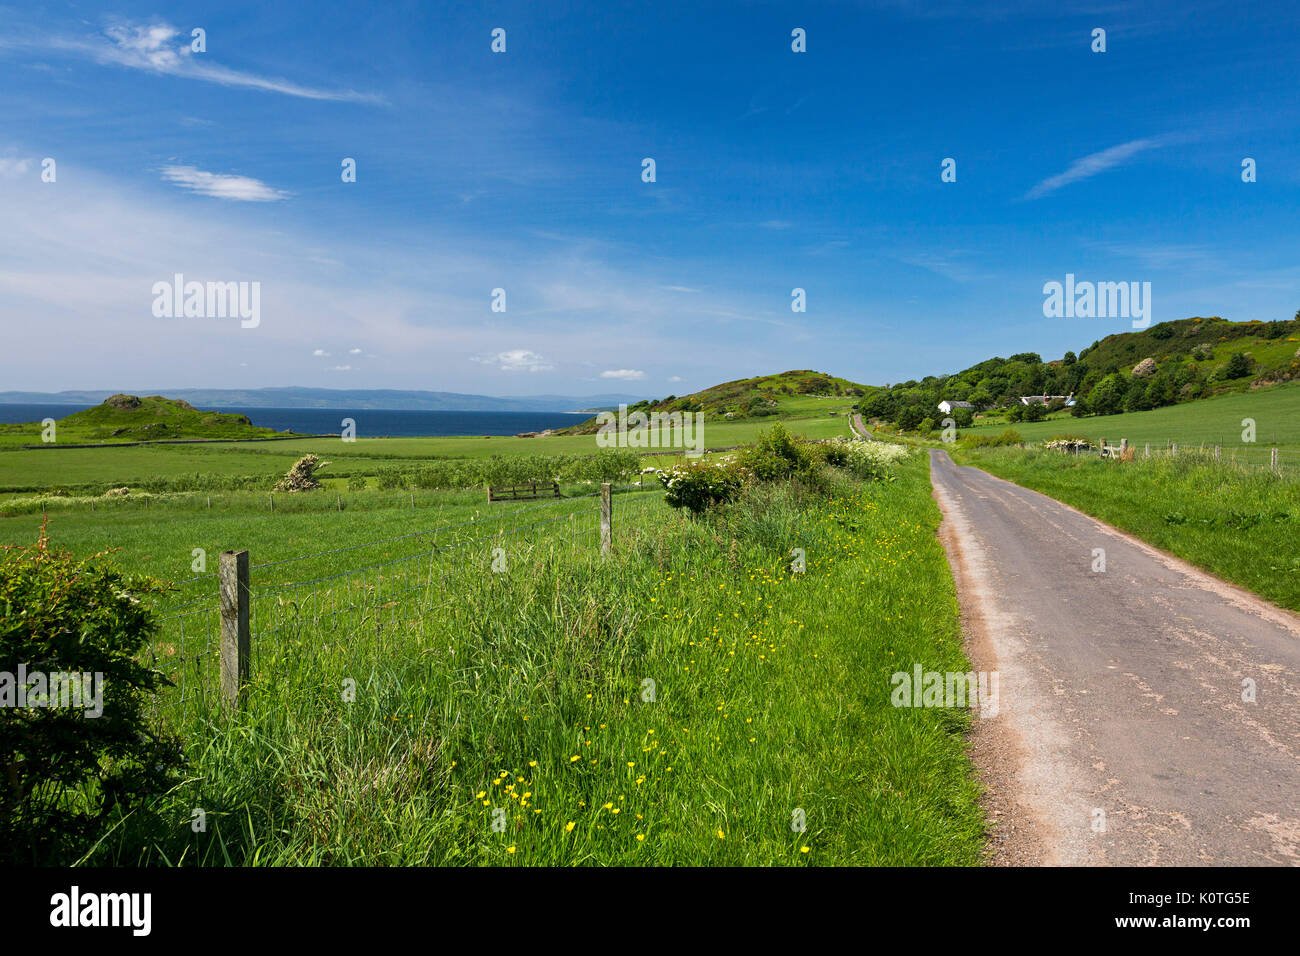 Narrow road slicing through verdant landscape of farmlands & low hills under blue sky on island of Bute, Scotland UK Stock Photo